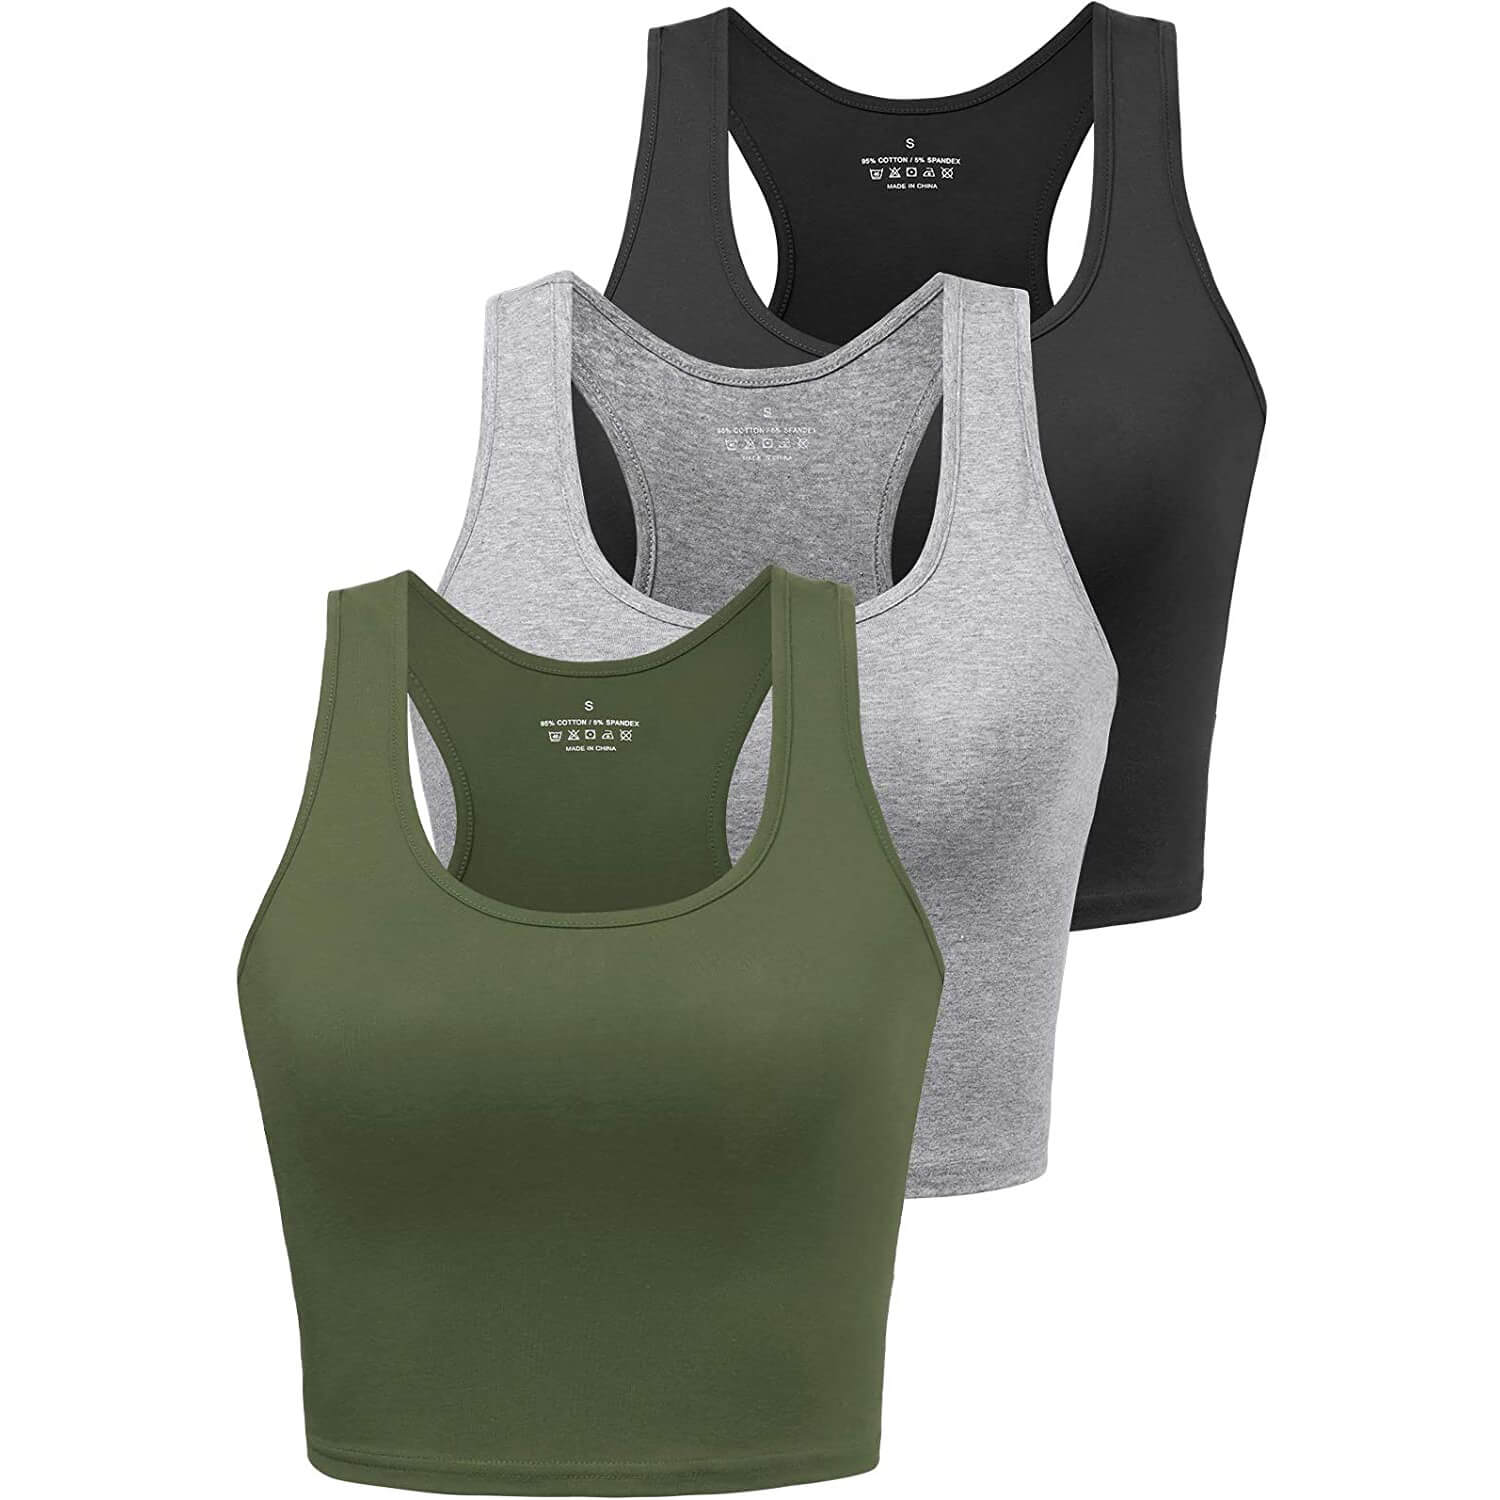 Women's Sports Crop Tank Tops Sleeveless Shirts 03